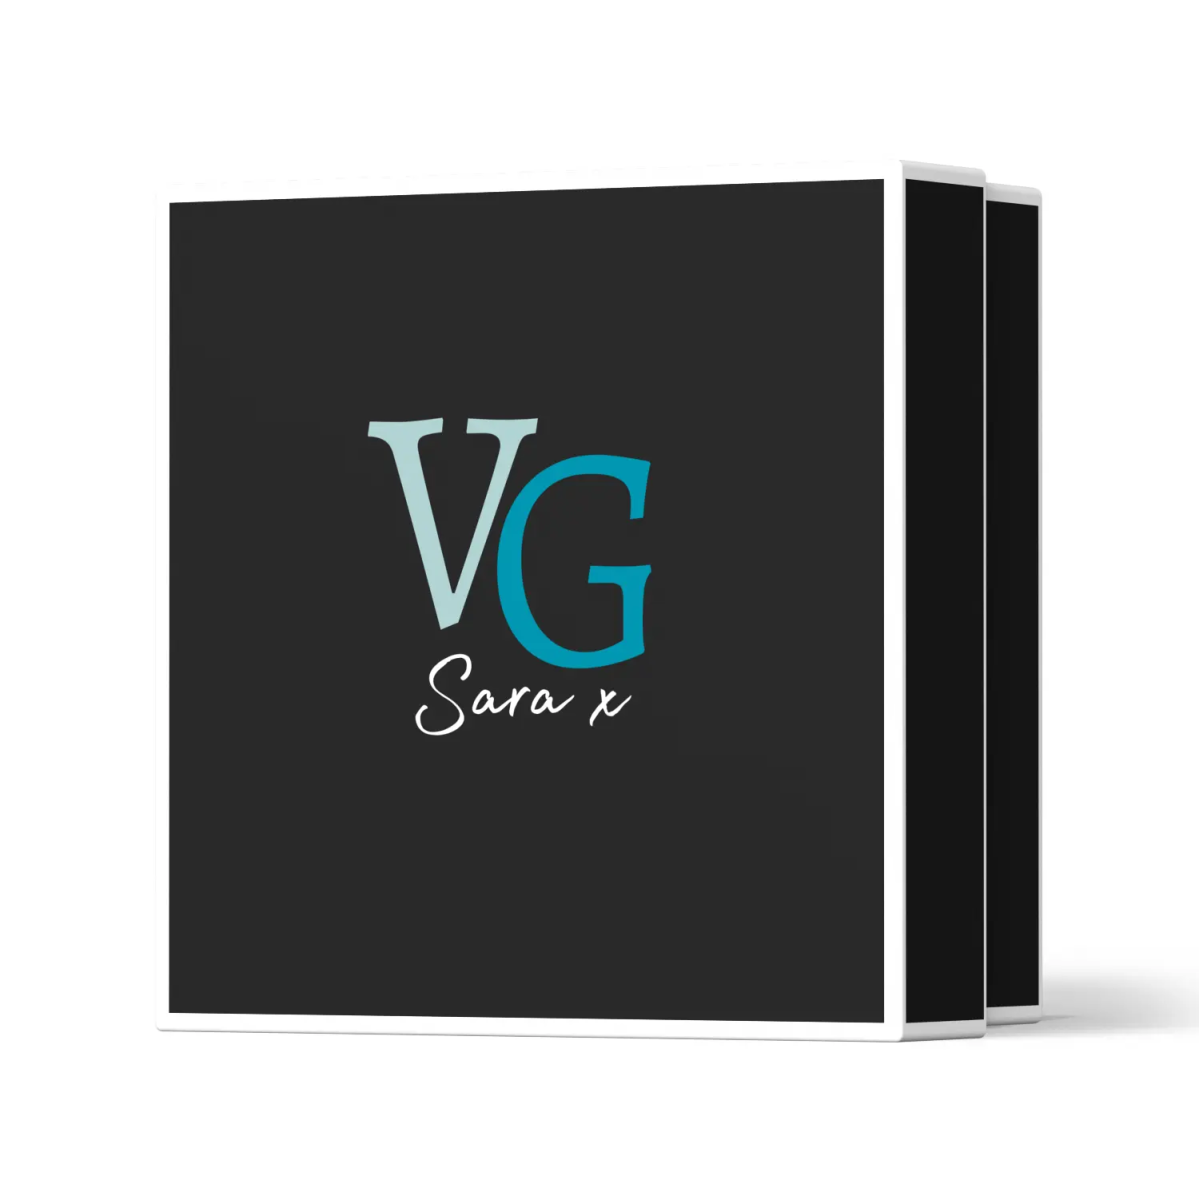 black box with a logo VG Sara x on a white canvas